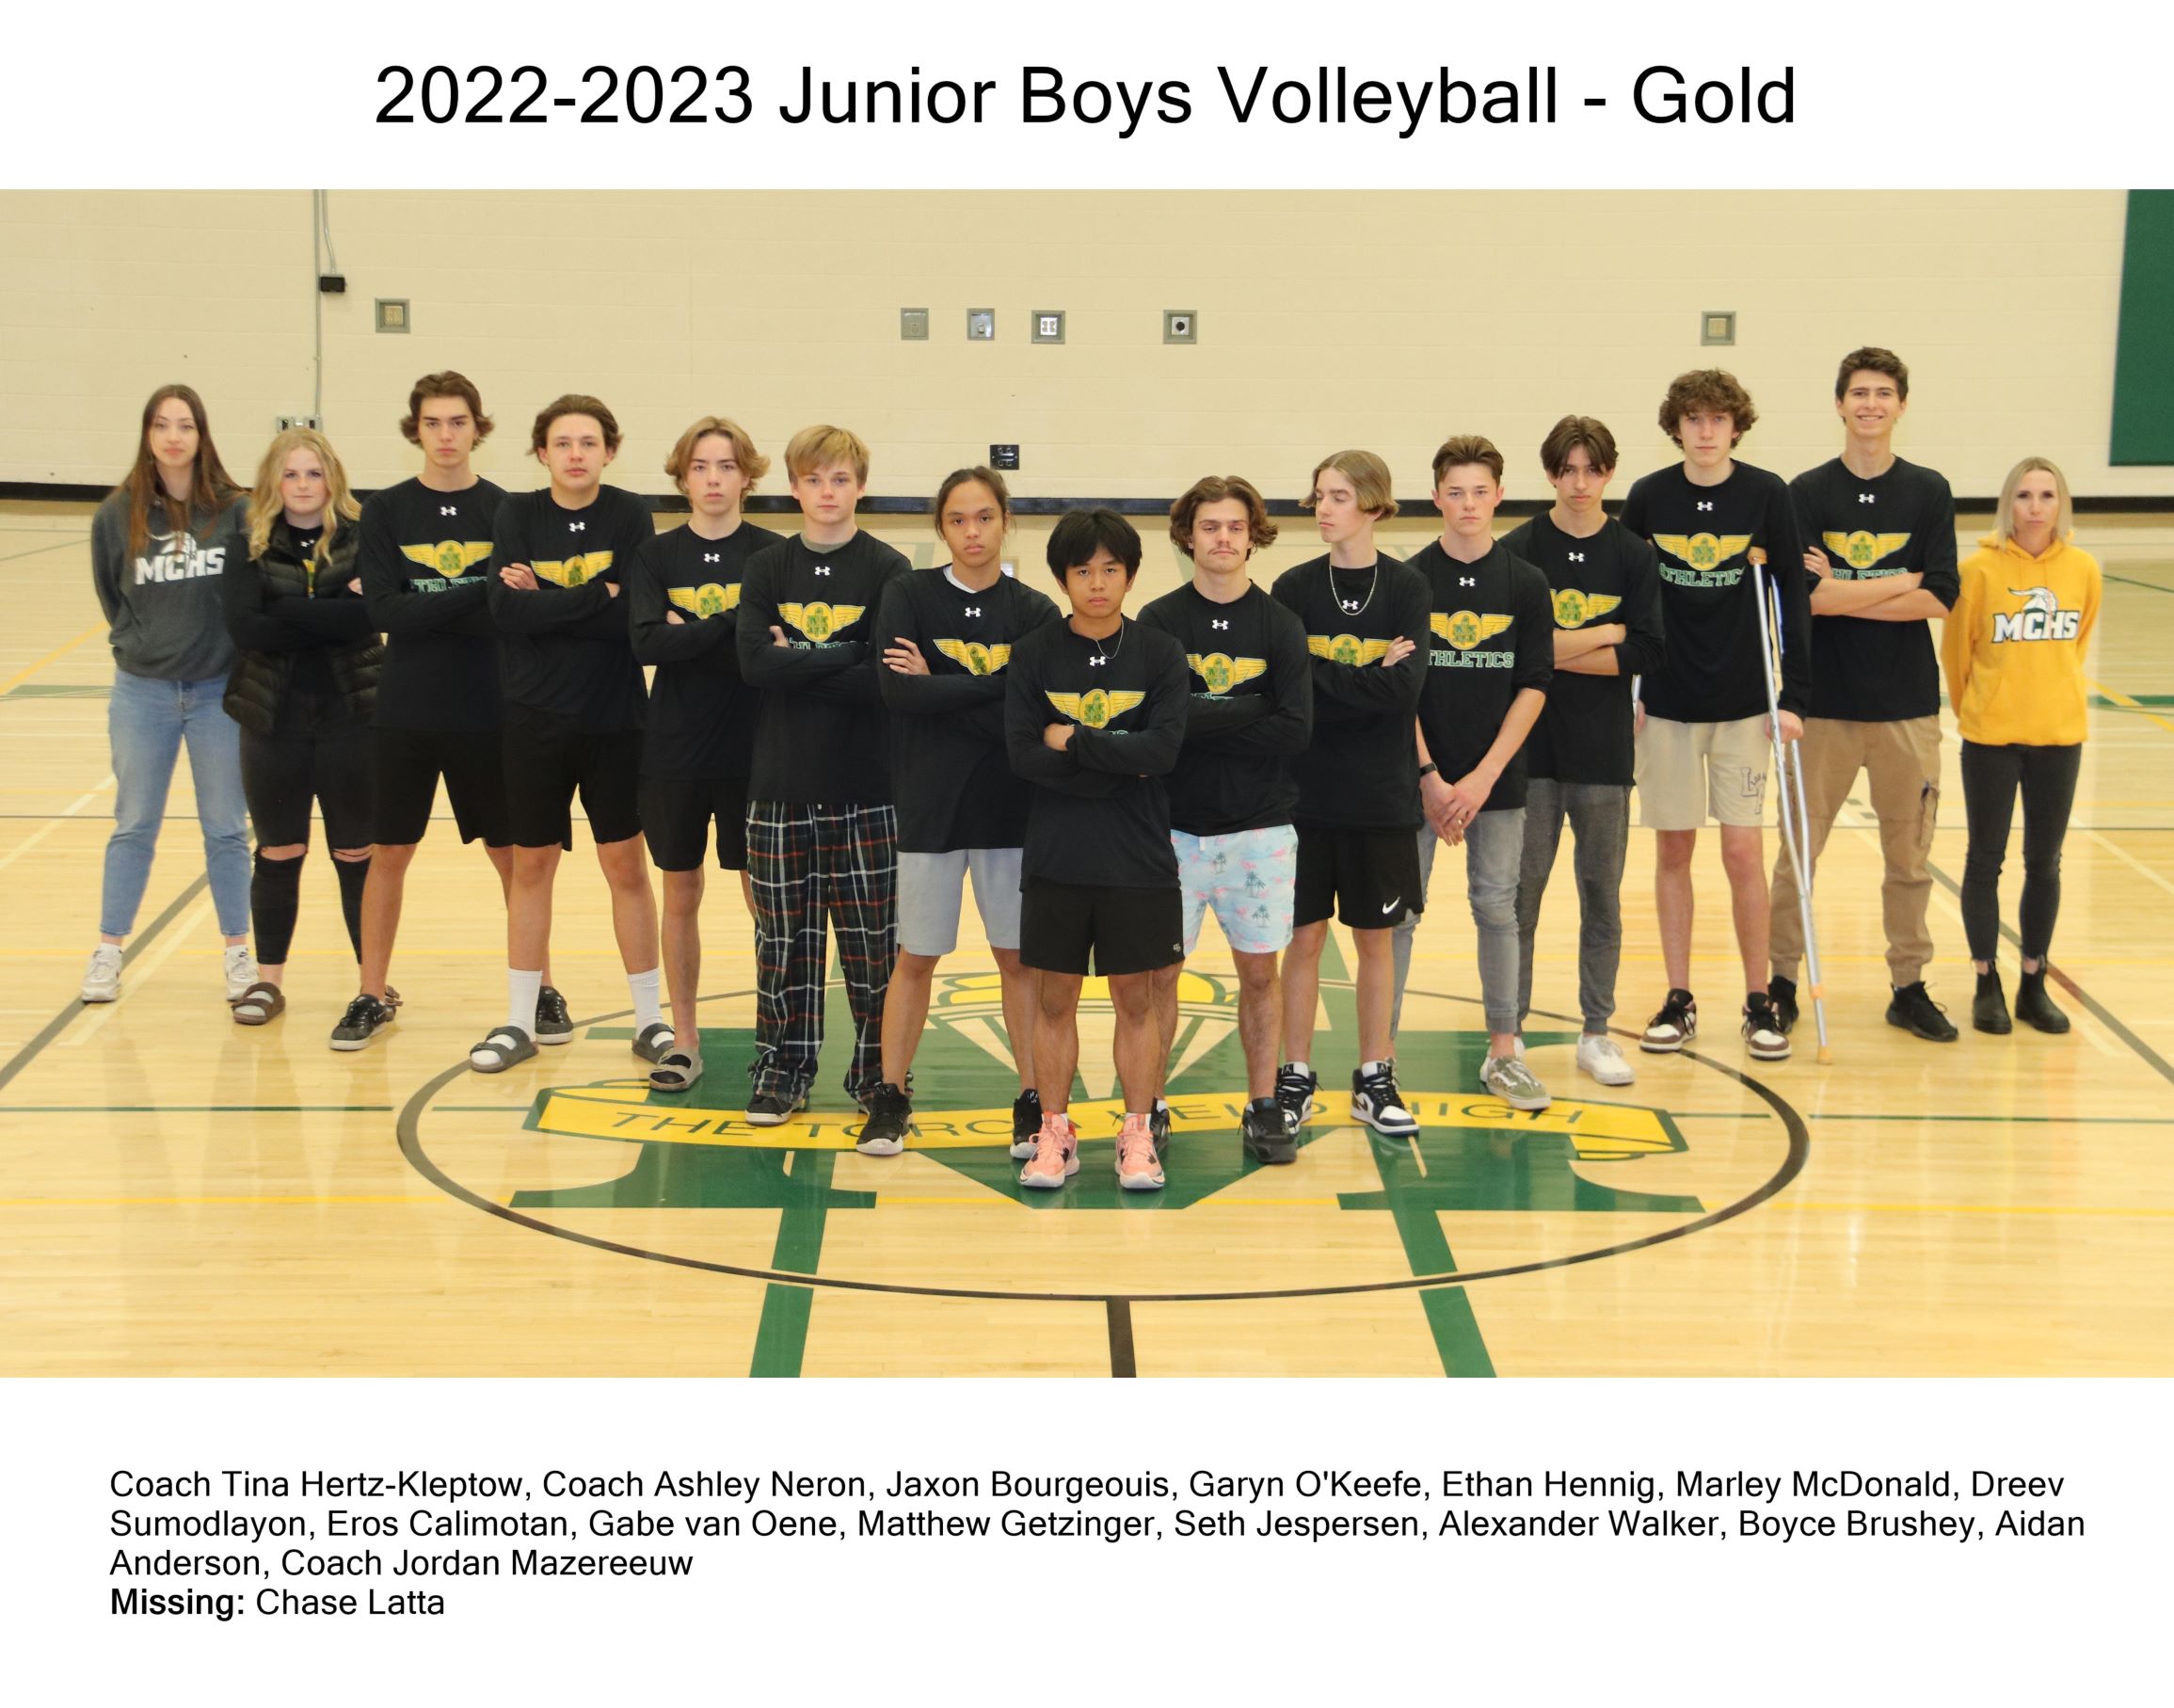 Jr Boys Gold Volleyball